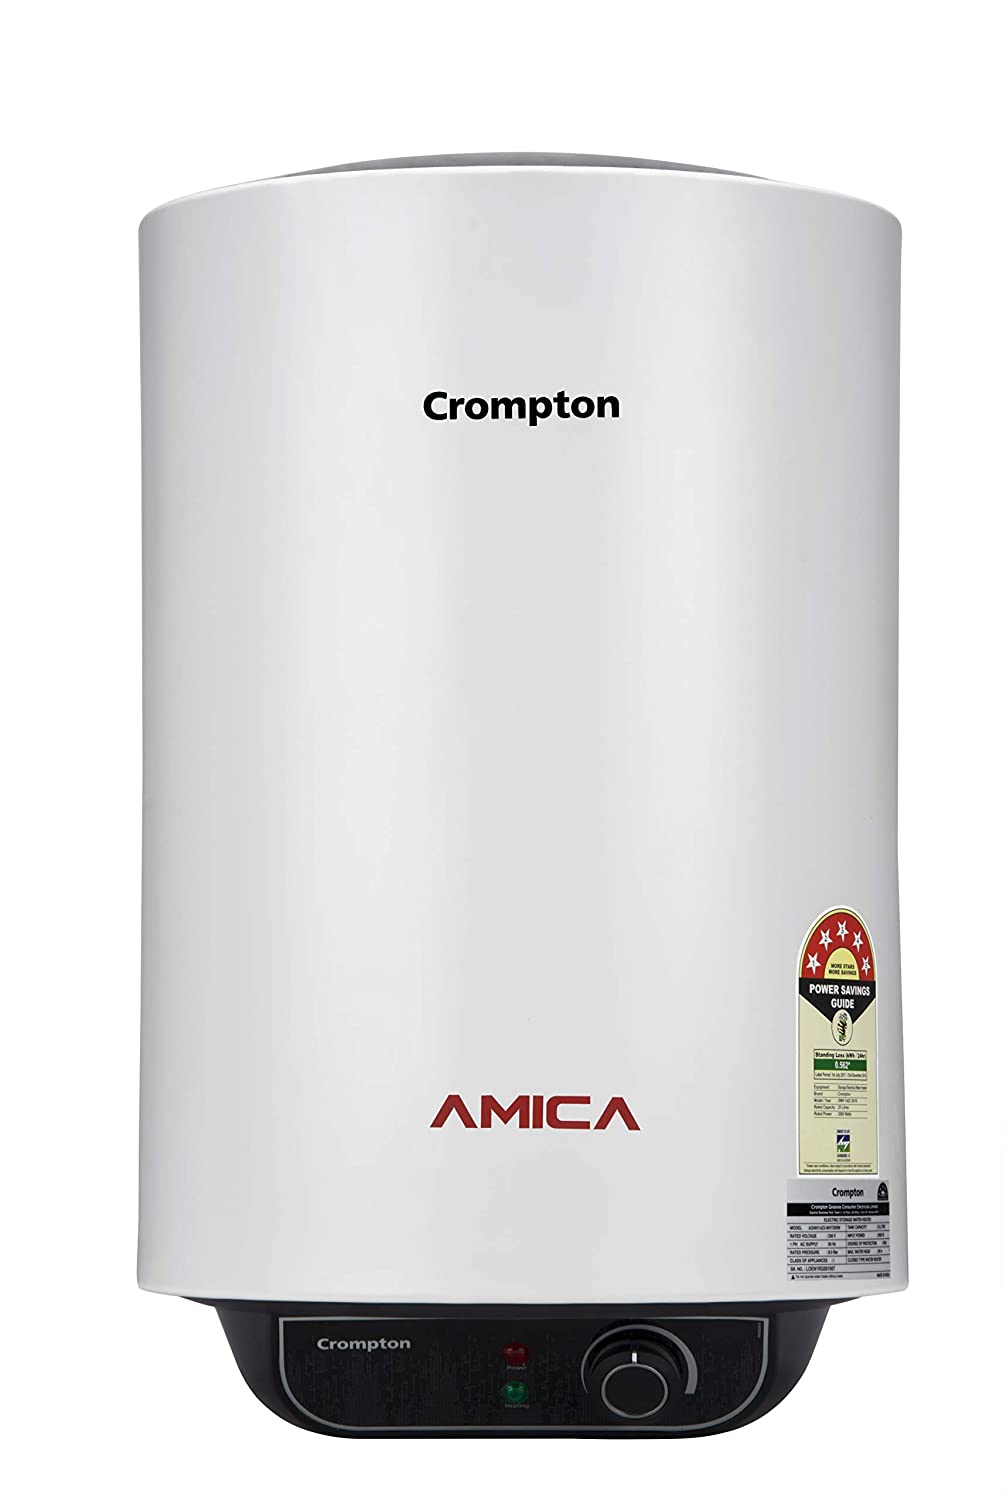 crompton amica 15L water heater